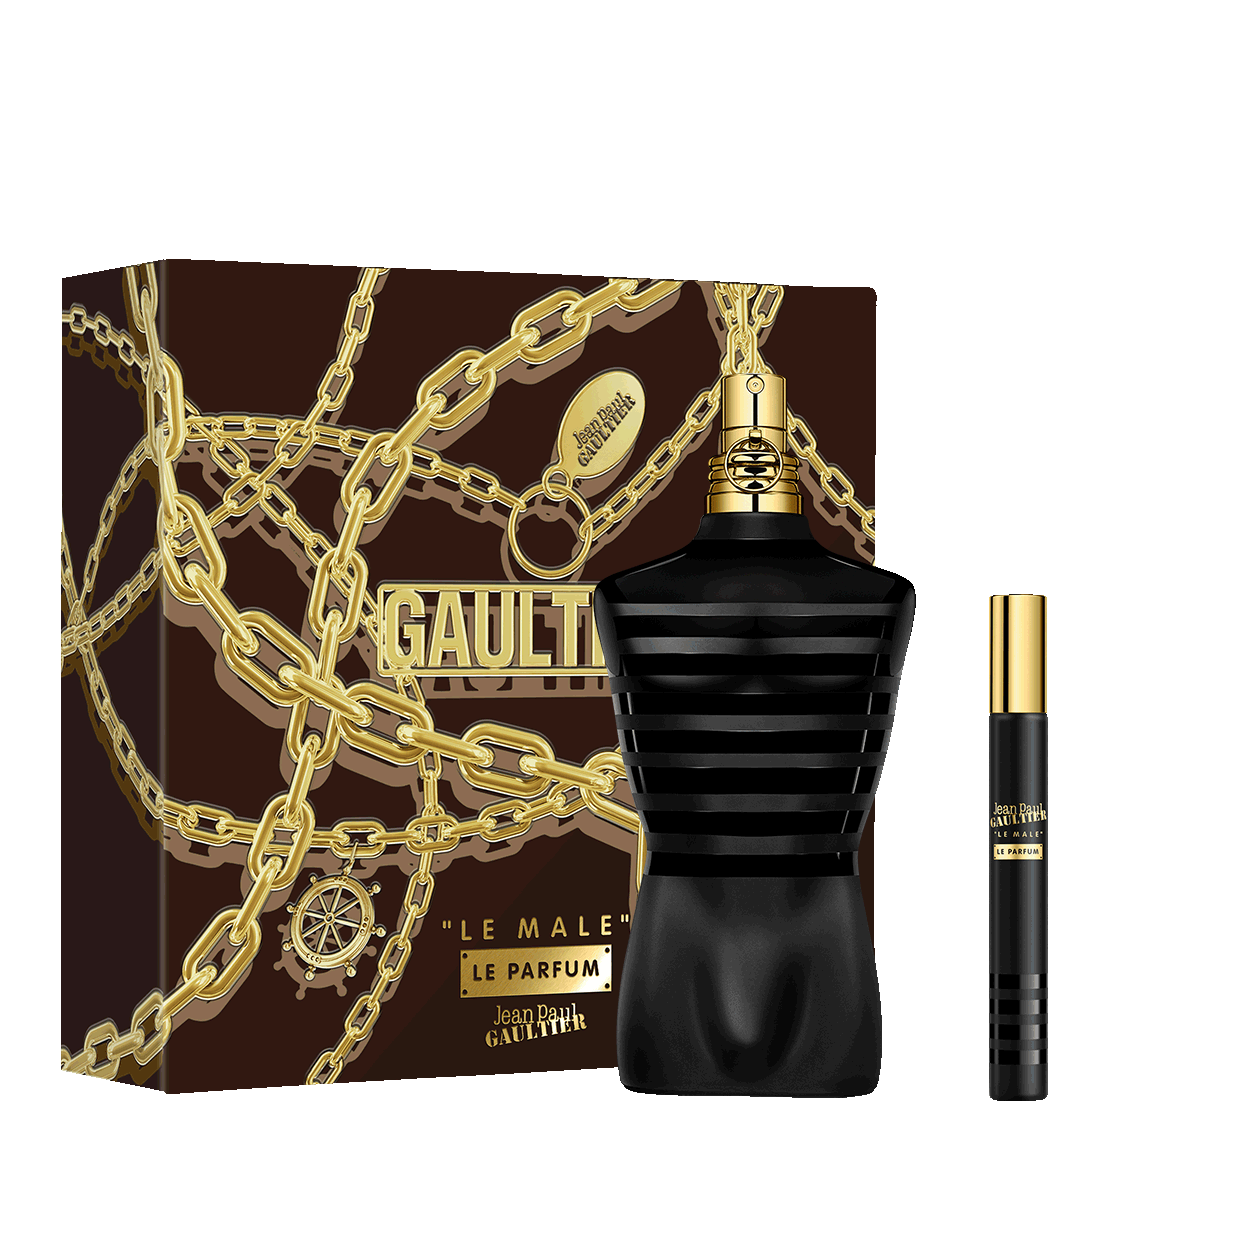 JEAN PAUL GAULTIER Le Male Le Parfum EdP 75 ml - Perfume Gift Set